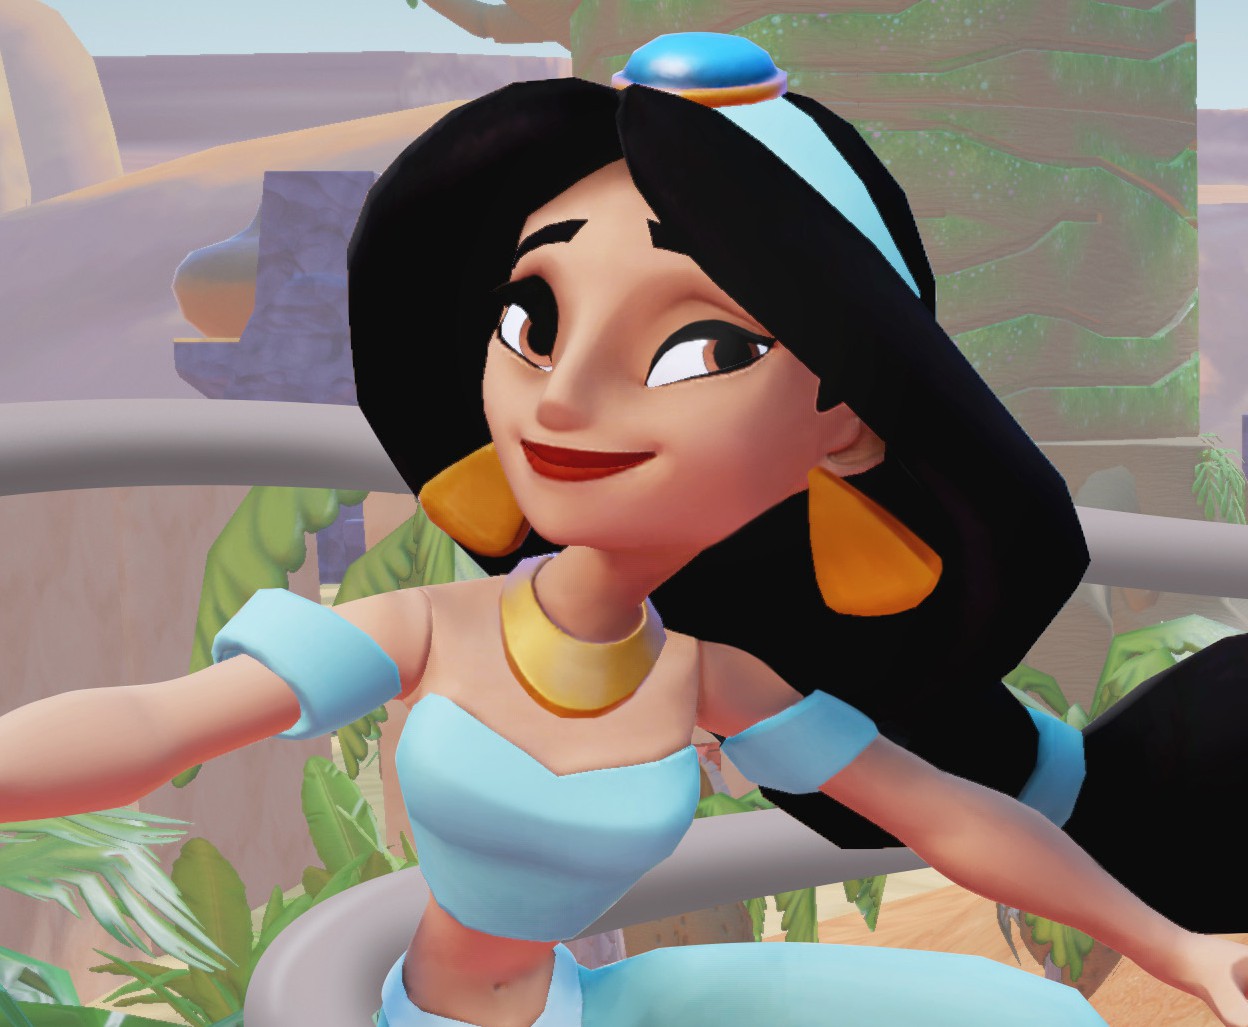 Aladdin and Jasmine Set to Land Their Magic Carpet in Disney Infinity 2.0